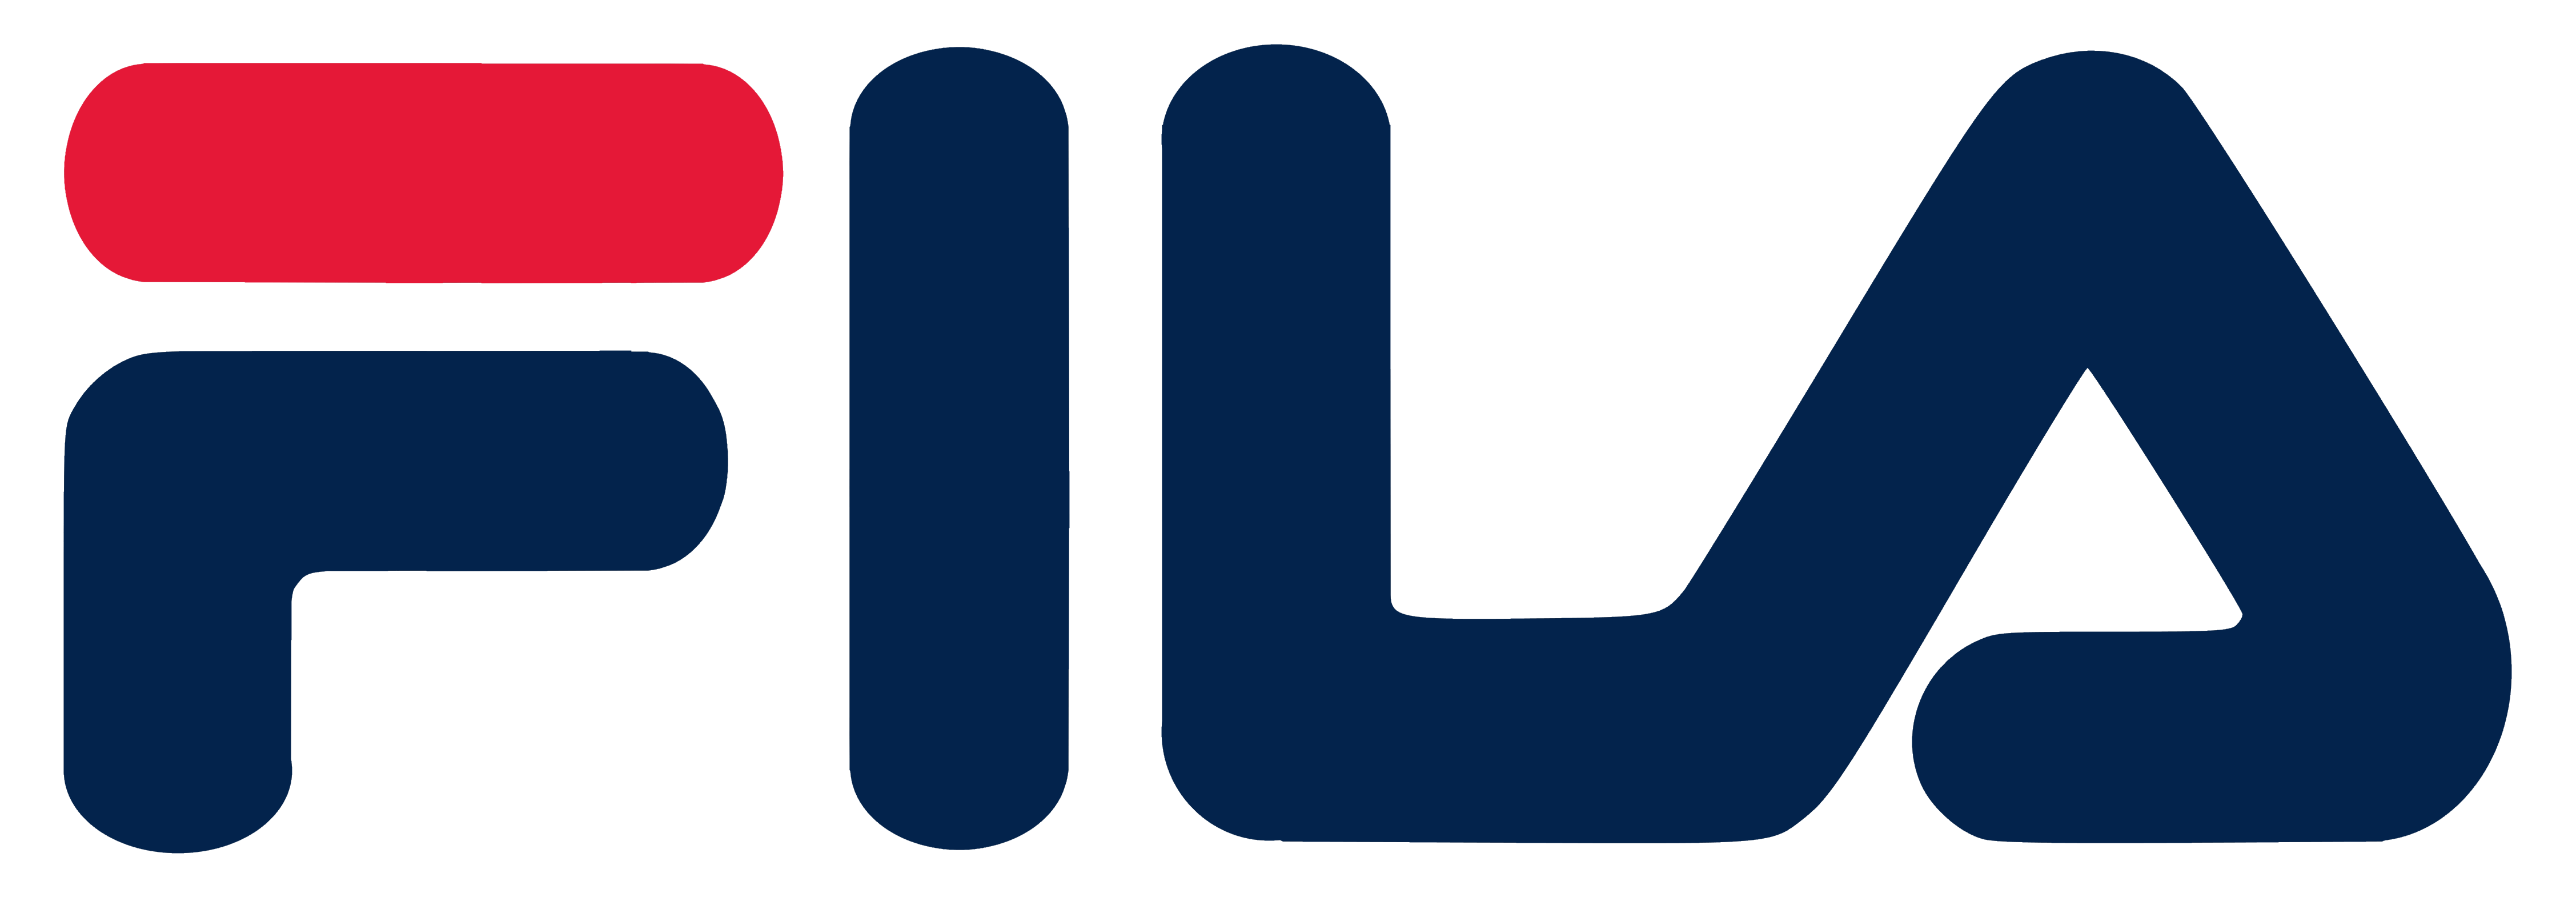 Fila logo, logotype